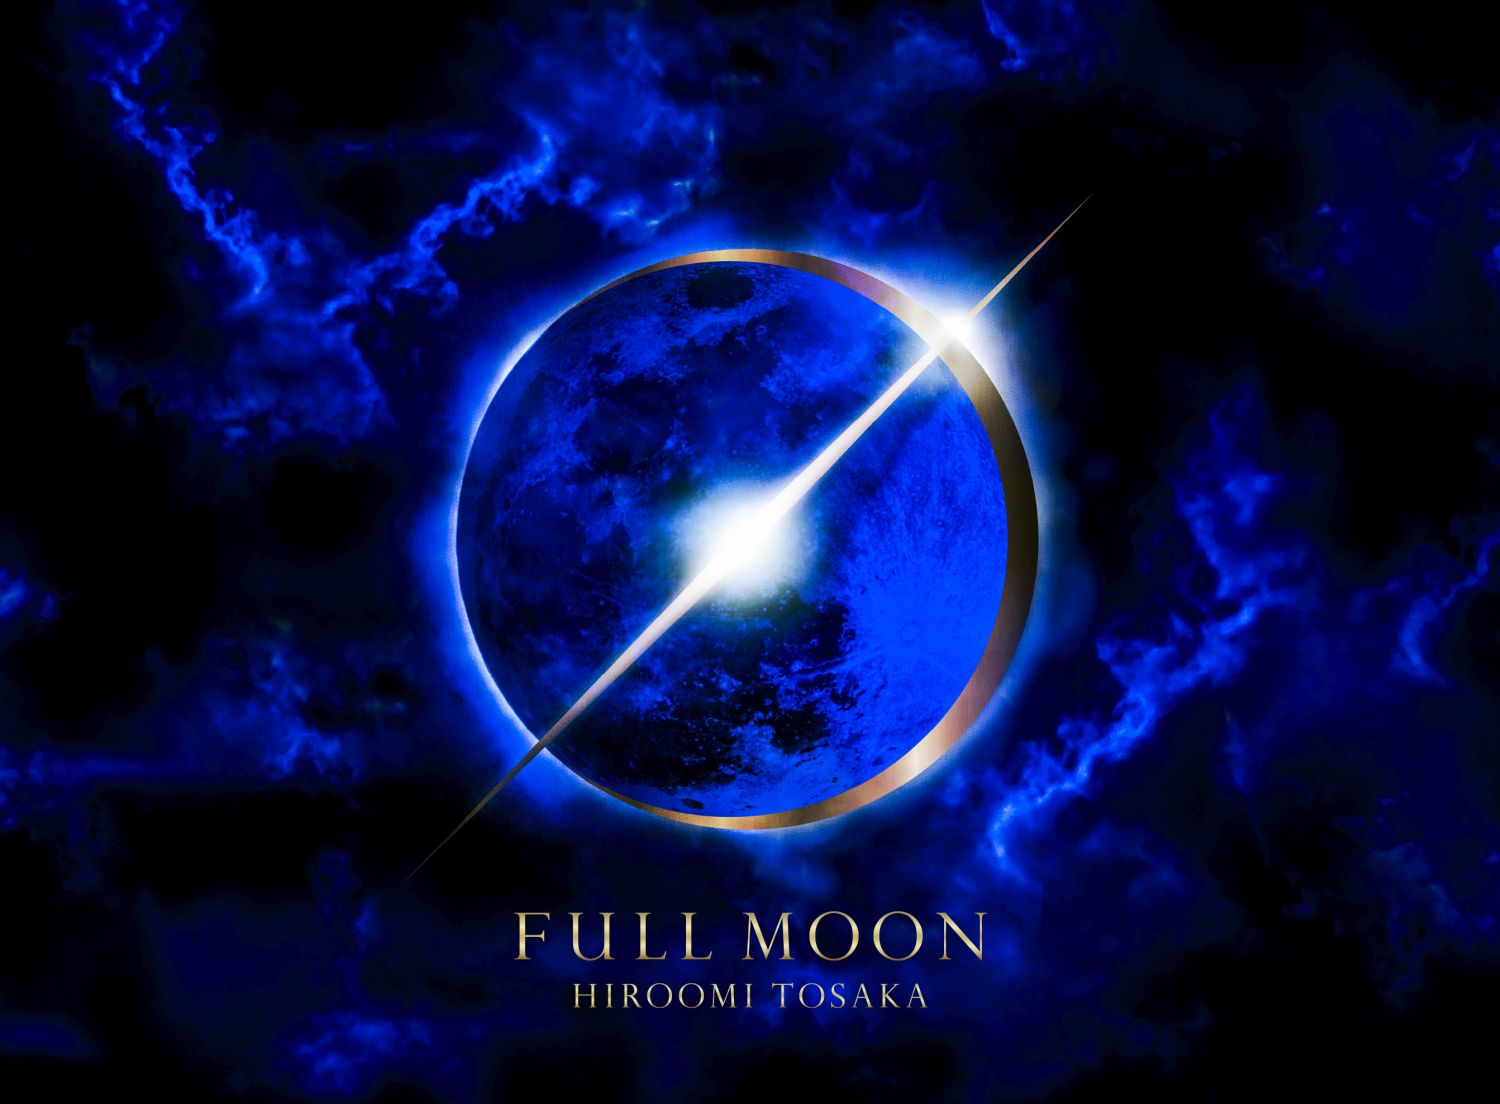 FULL MOON 初回限定盤 CD＋Blu-ray＋スマプラ [ HIROOMI TOSAKA ]